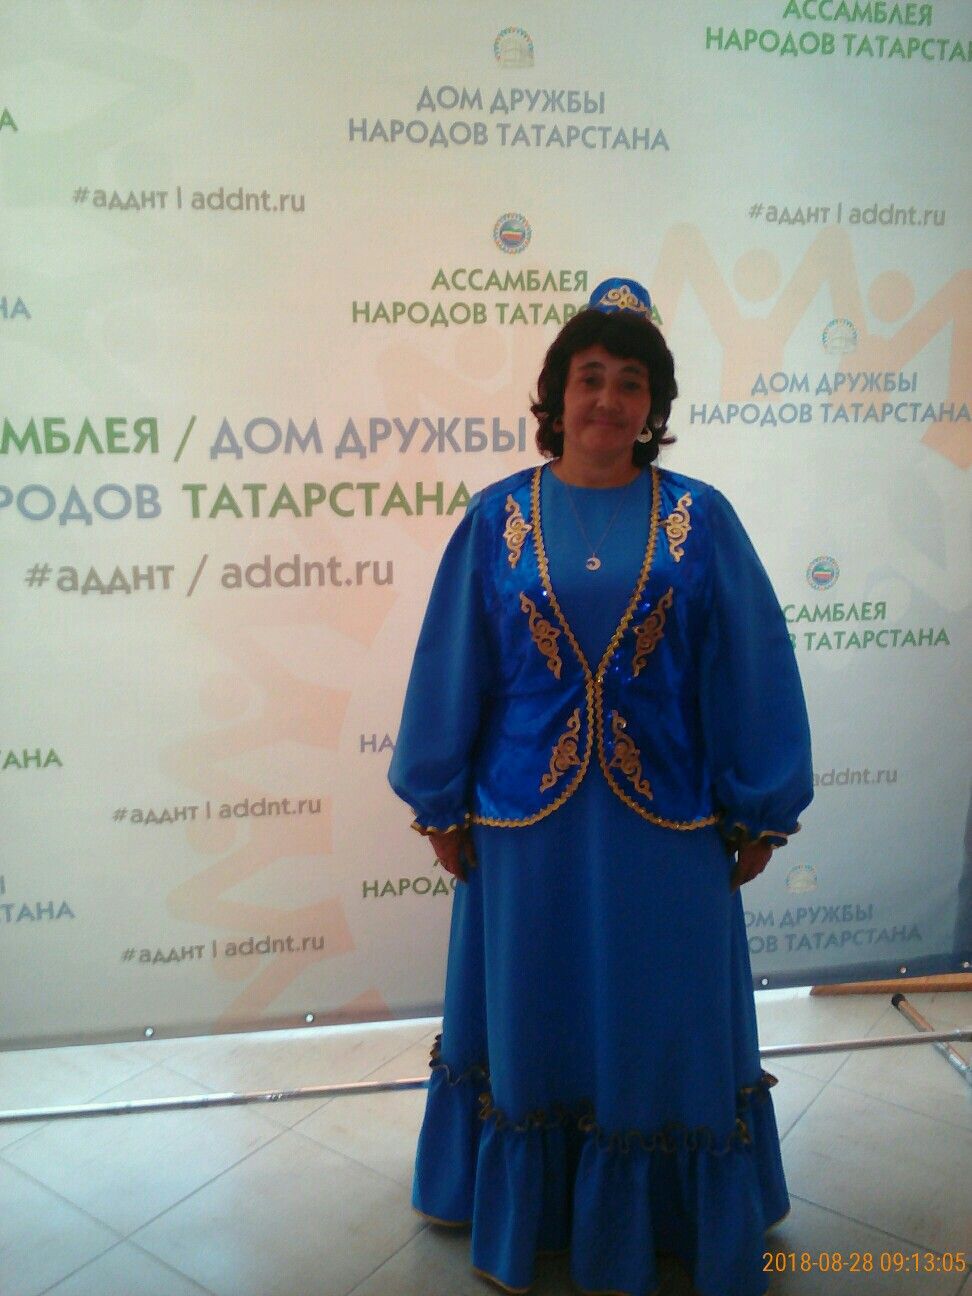 Наиля Арсланова из Нижних Тиган стала лауретом на конкурсе "Казанское полотенце"